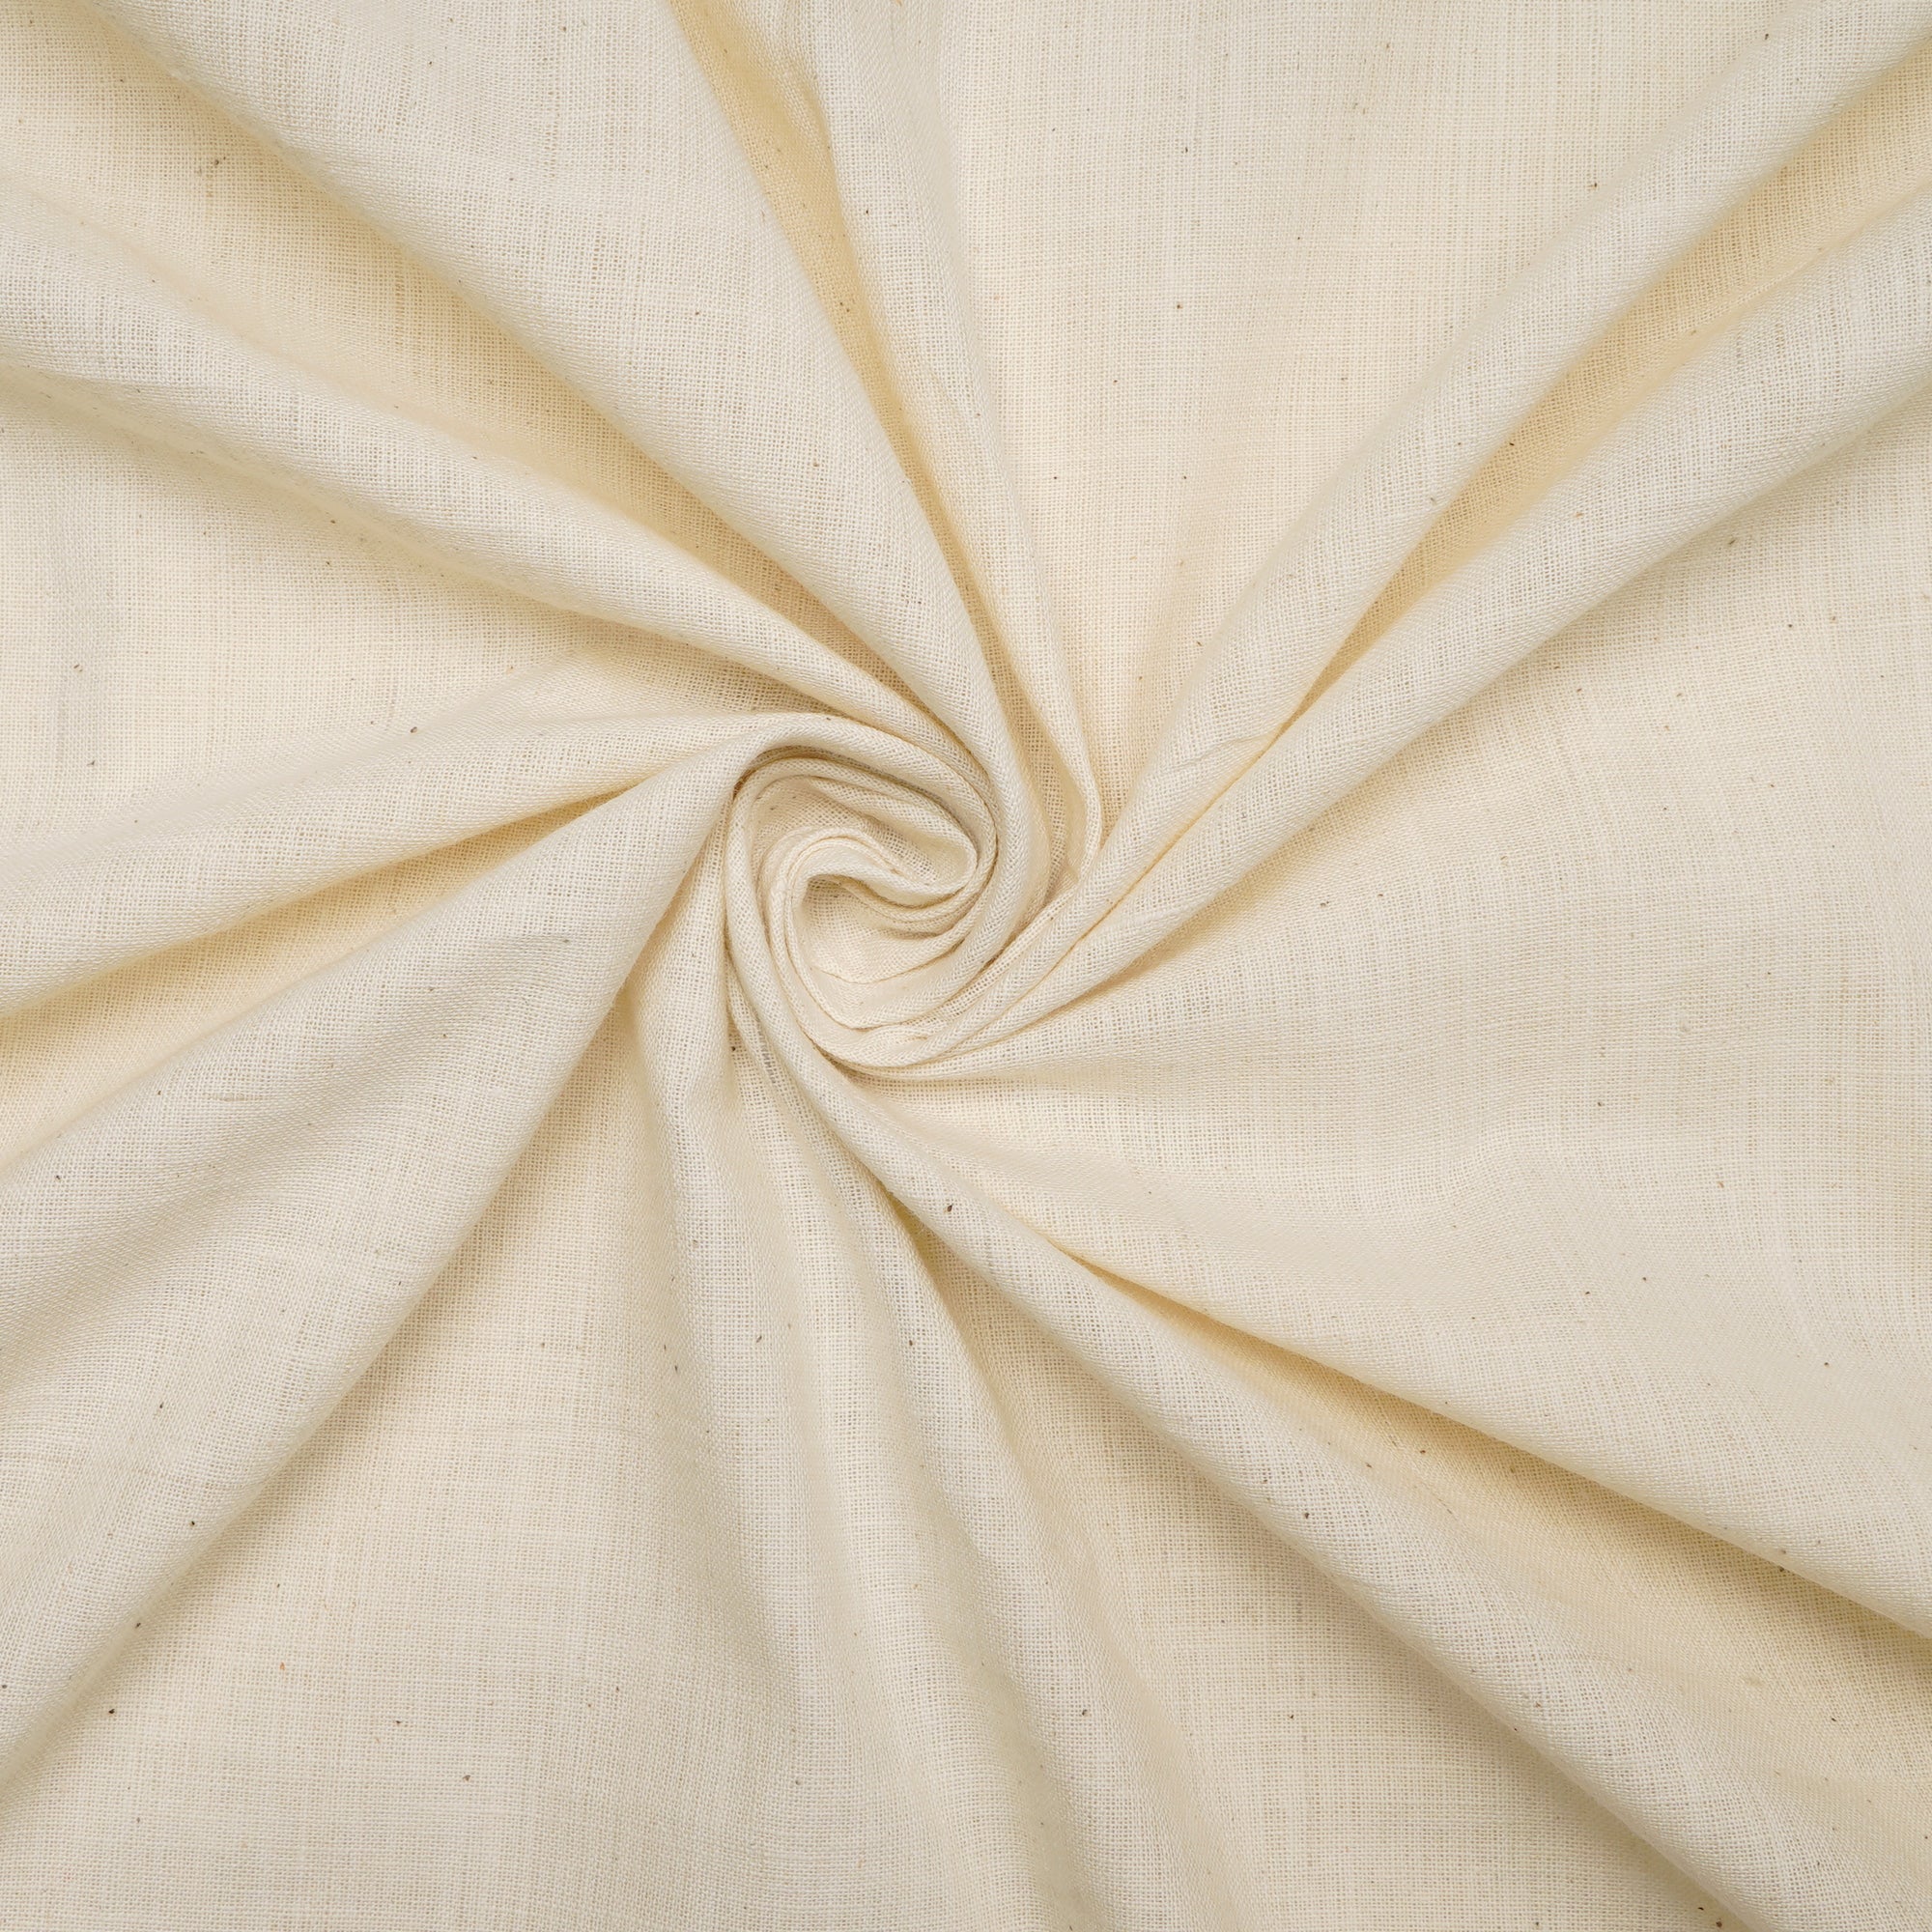 Off white Color Handwoven Handspun Cotton Fabric